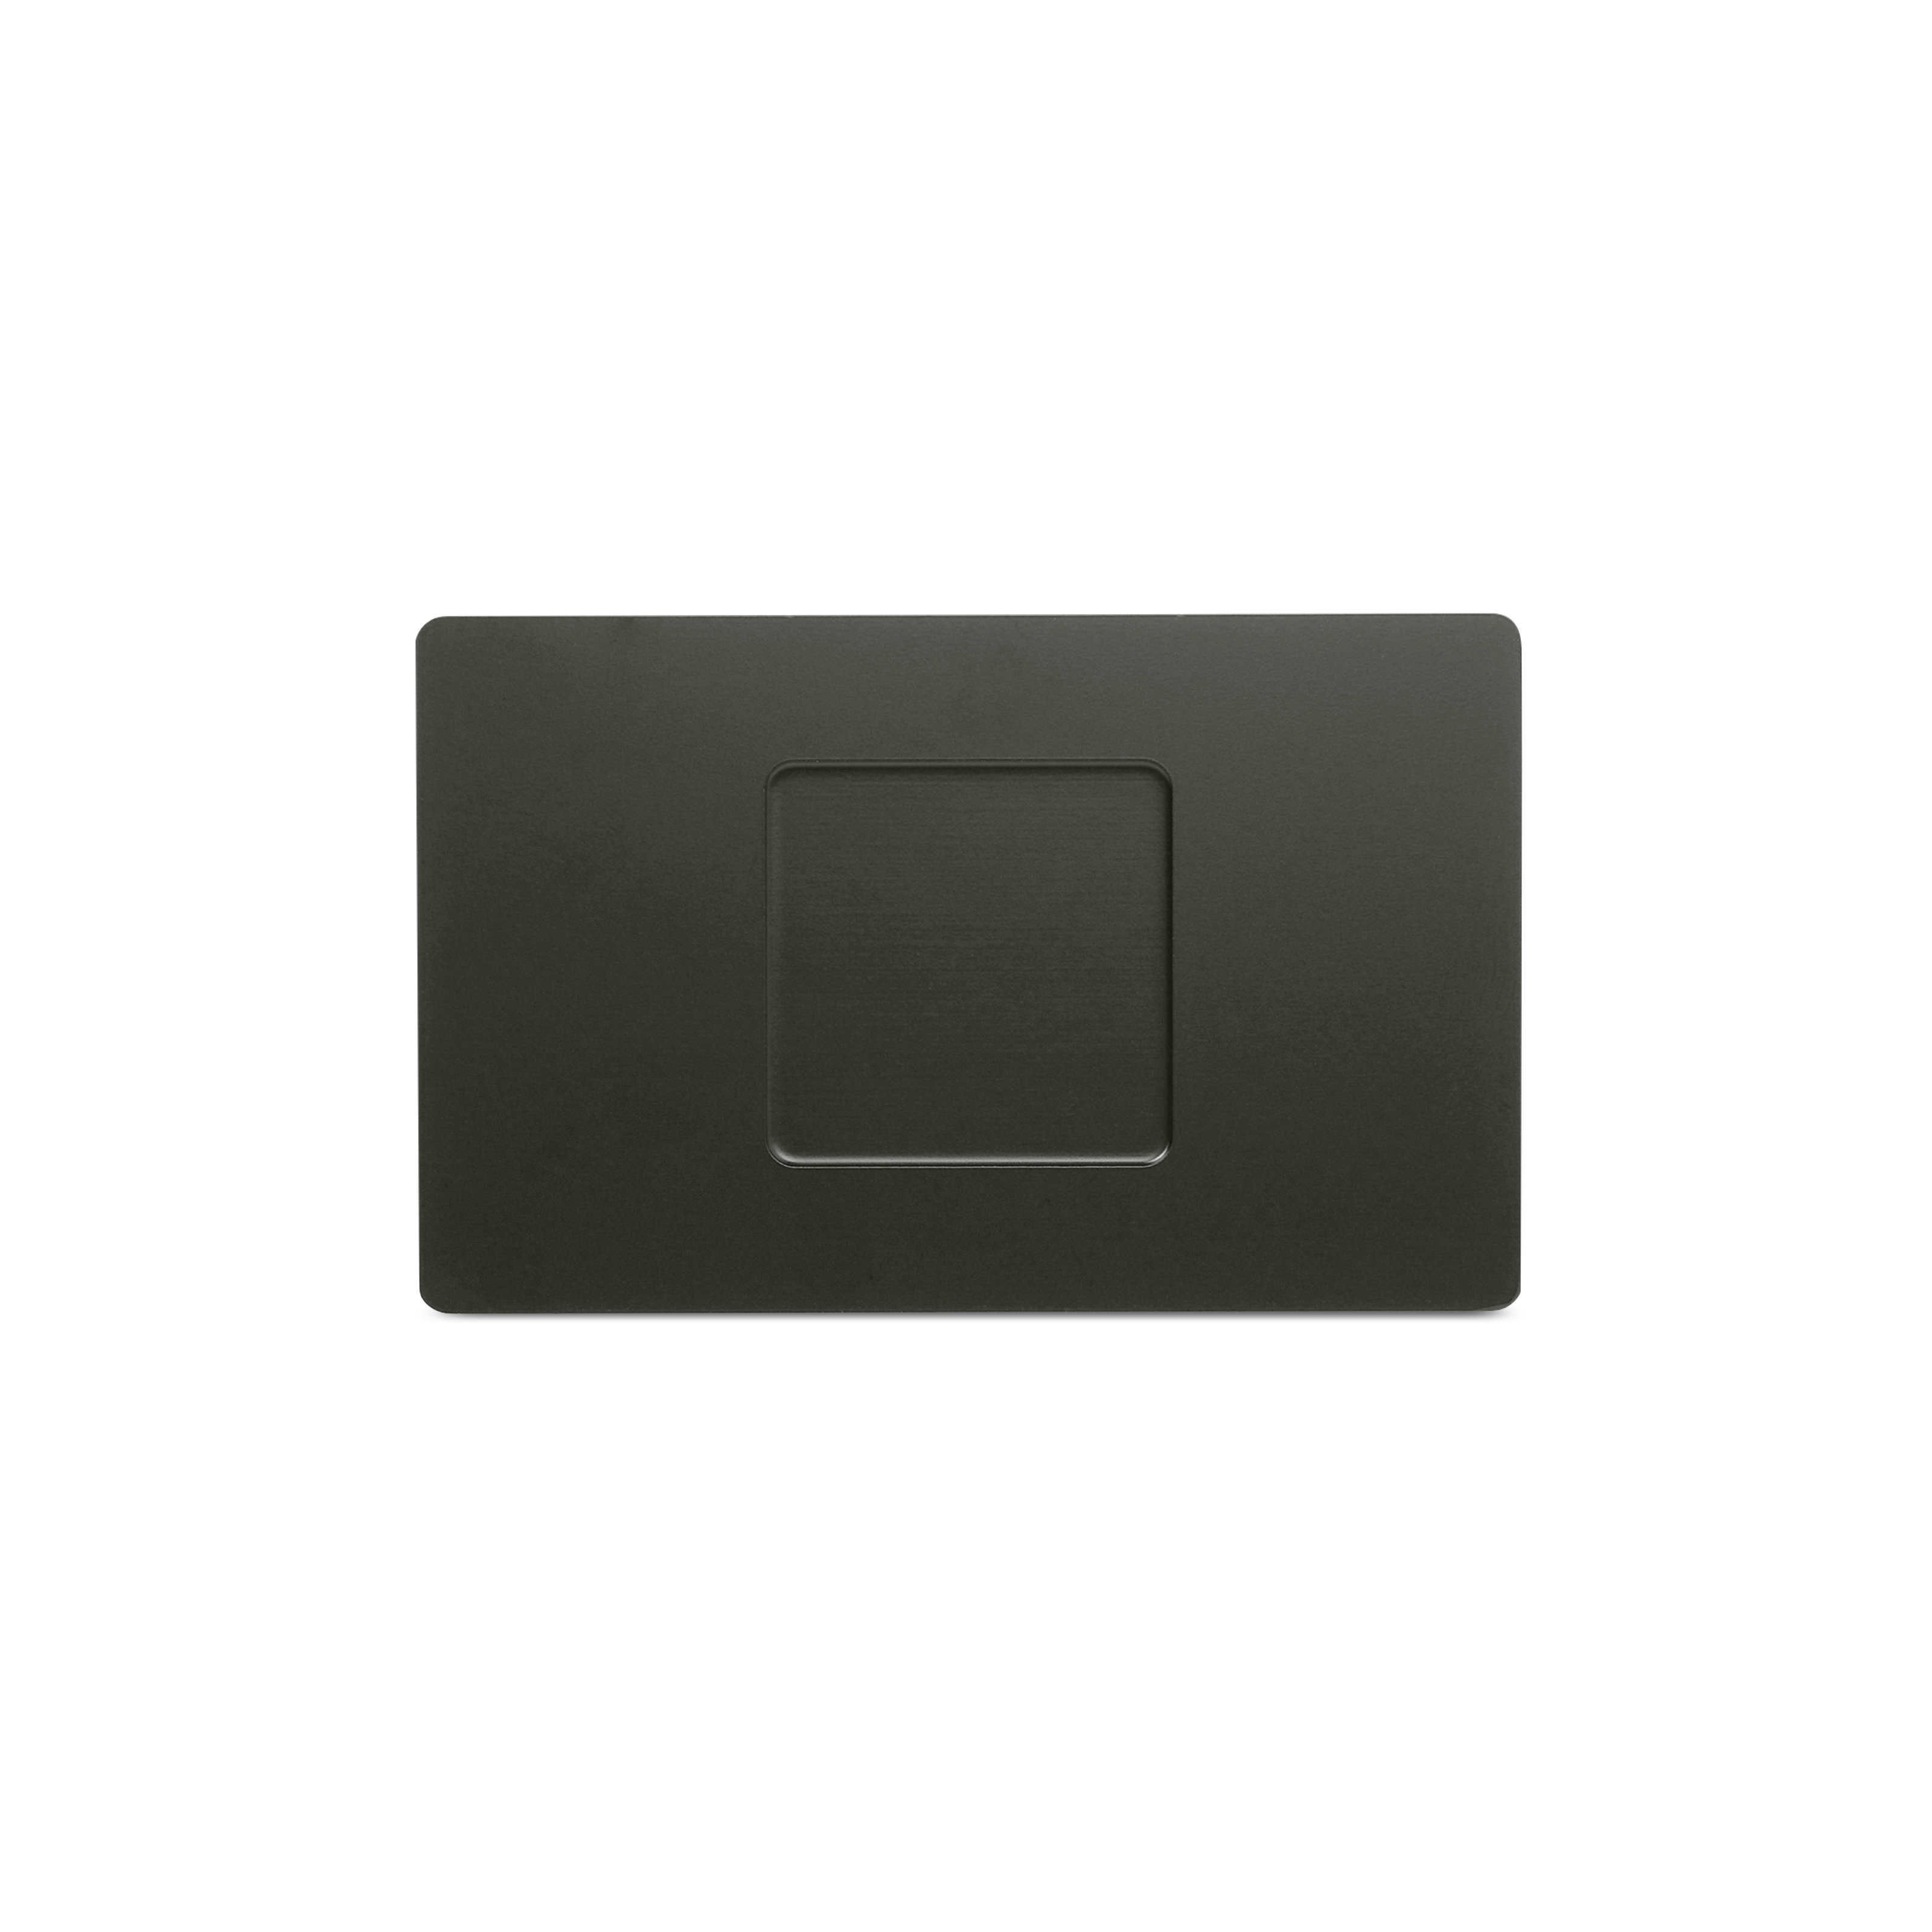 NFC-vCard - Digital business card - incl. NFC-vCard access - metal - 85.6 x 54 mm - black